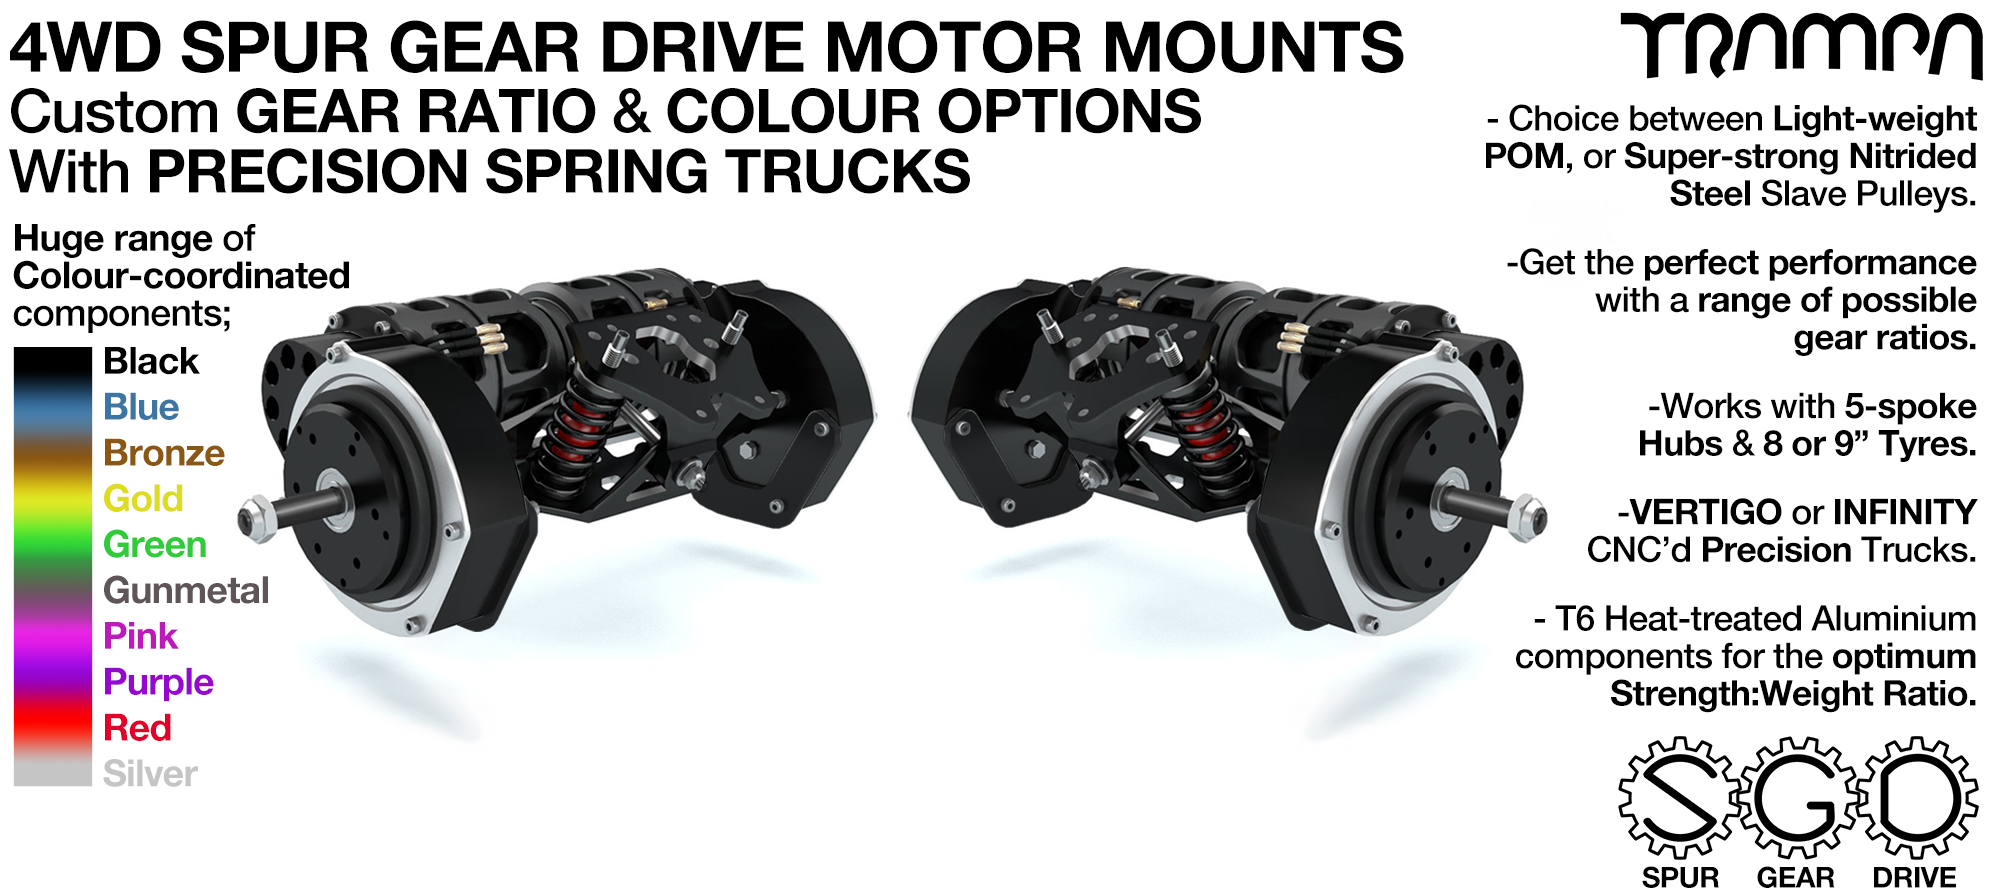 4WD Mountainboard Spur Gear Drive Motor Mounts on CNC Precision TRUCKS with Custom Motors 